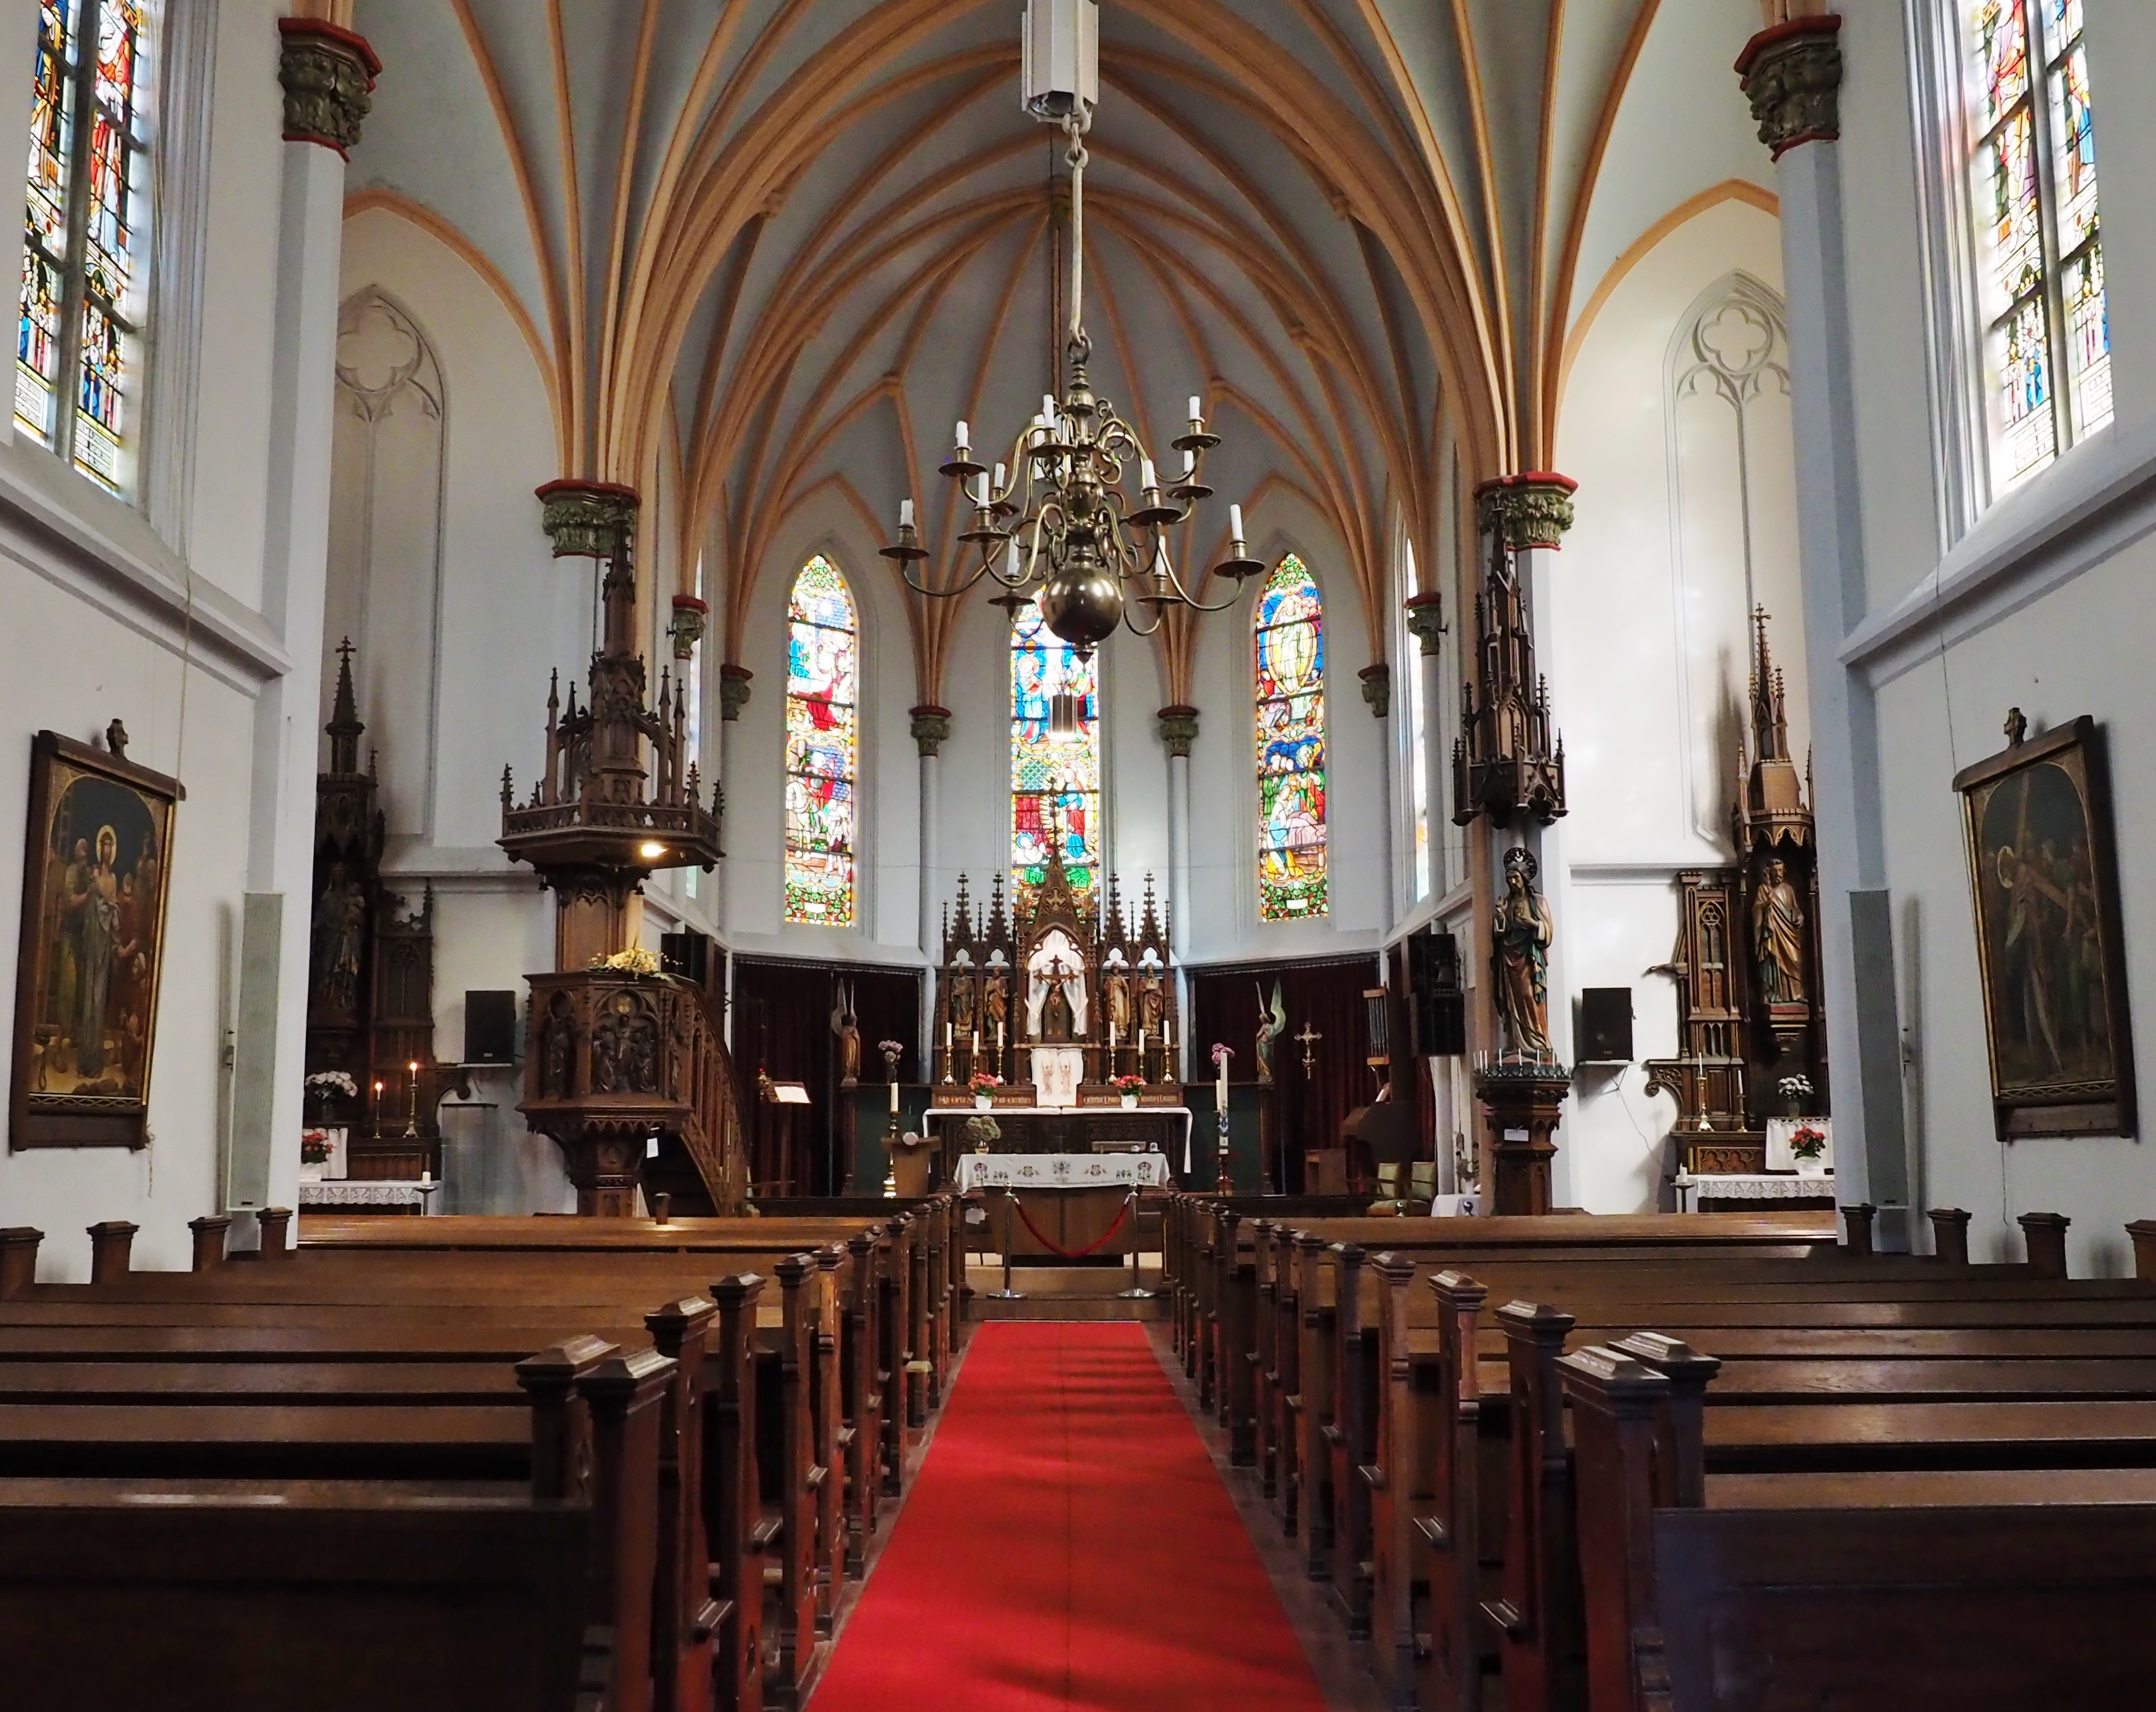 St. Martinus interieur-2